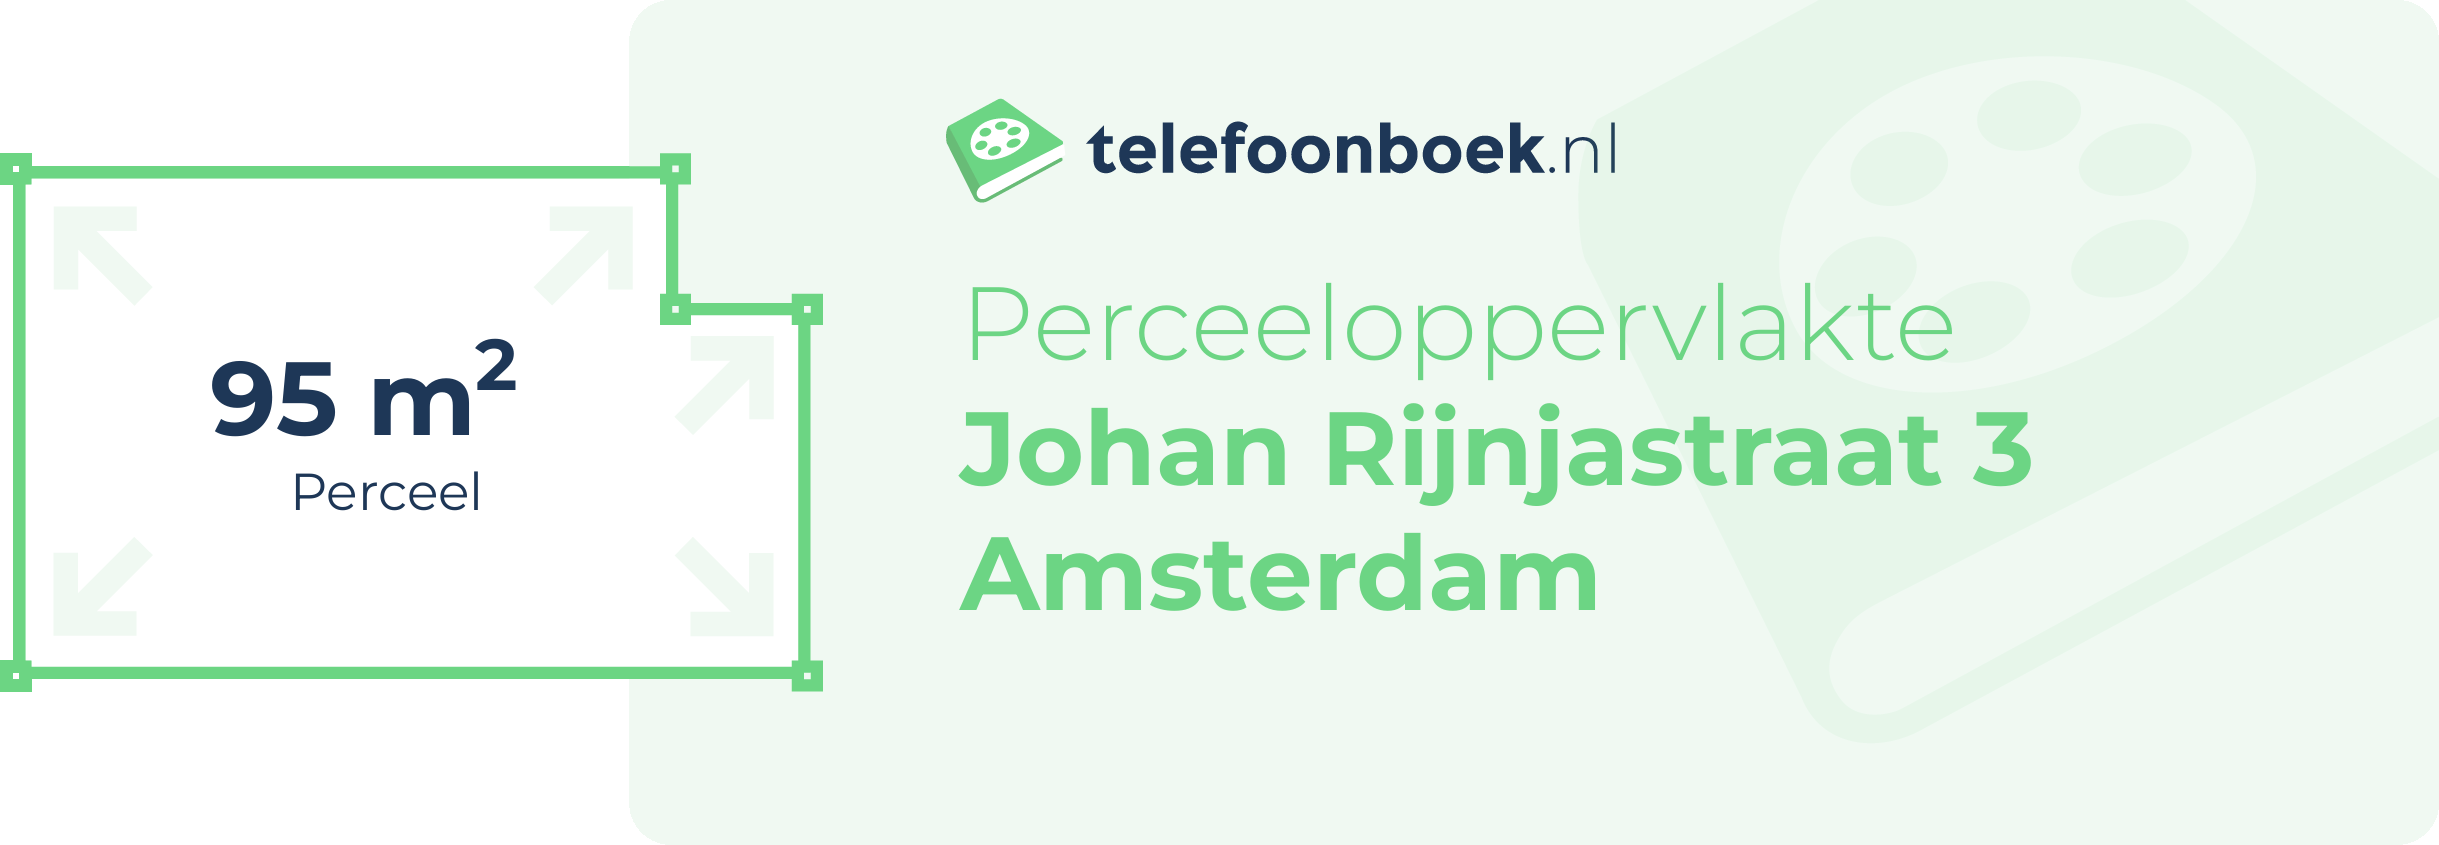 Perceeloppervlakte Johan Rijnjastraat 3 Amsterdam